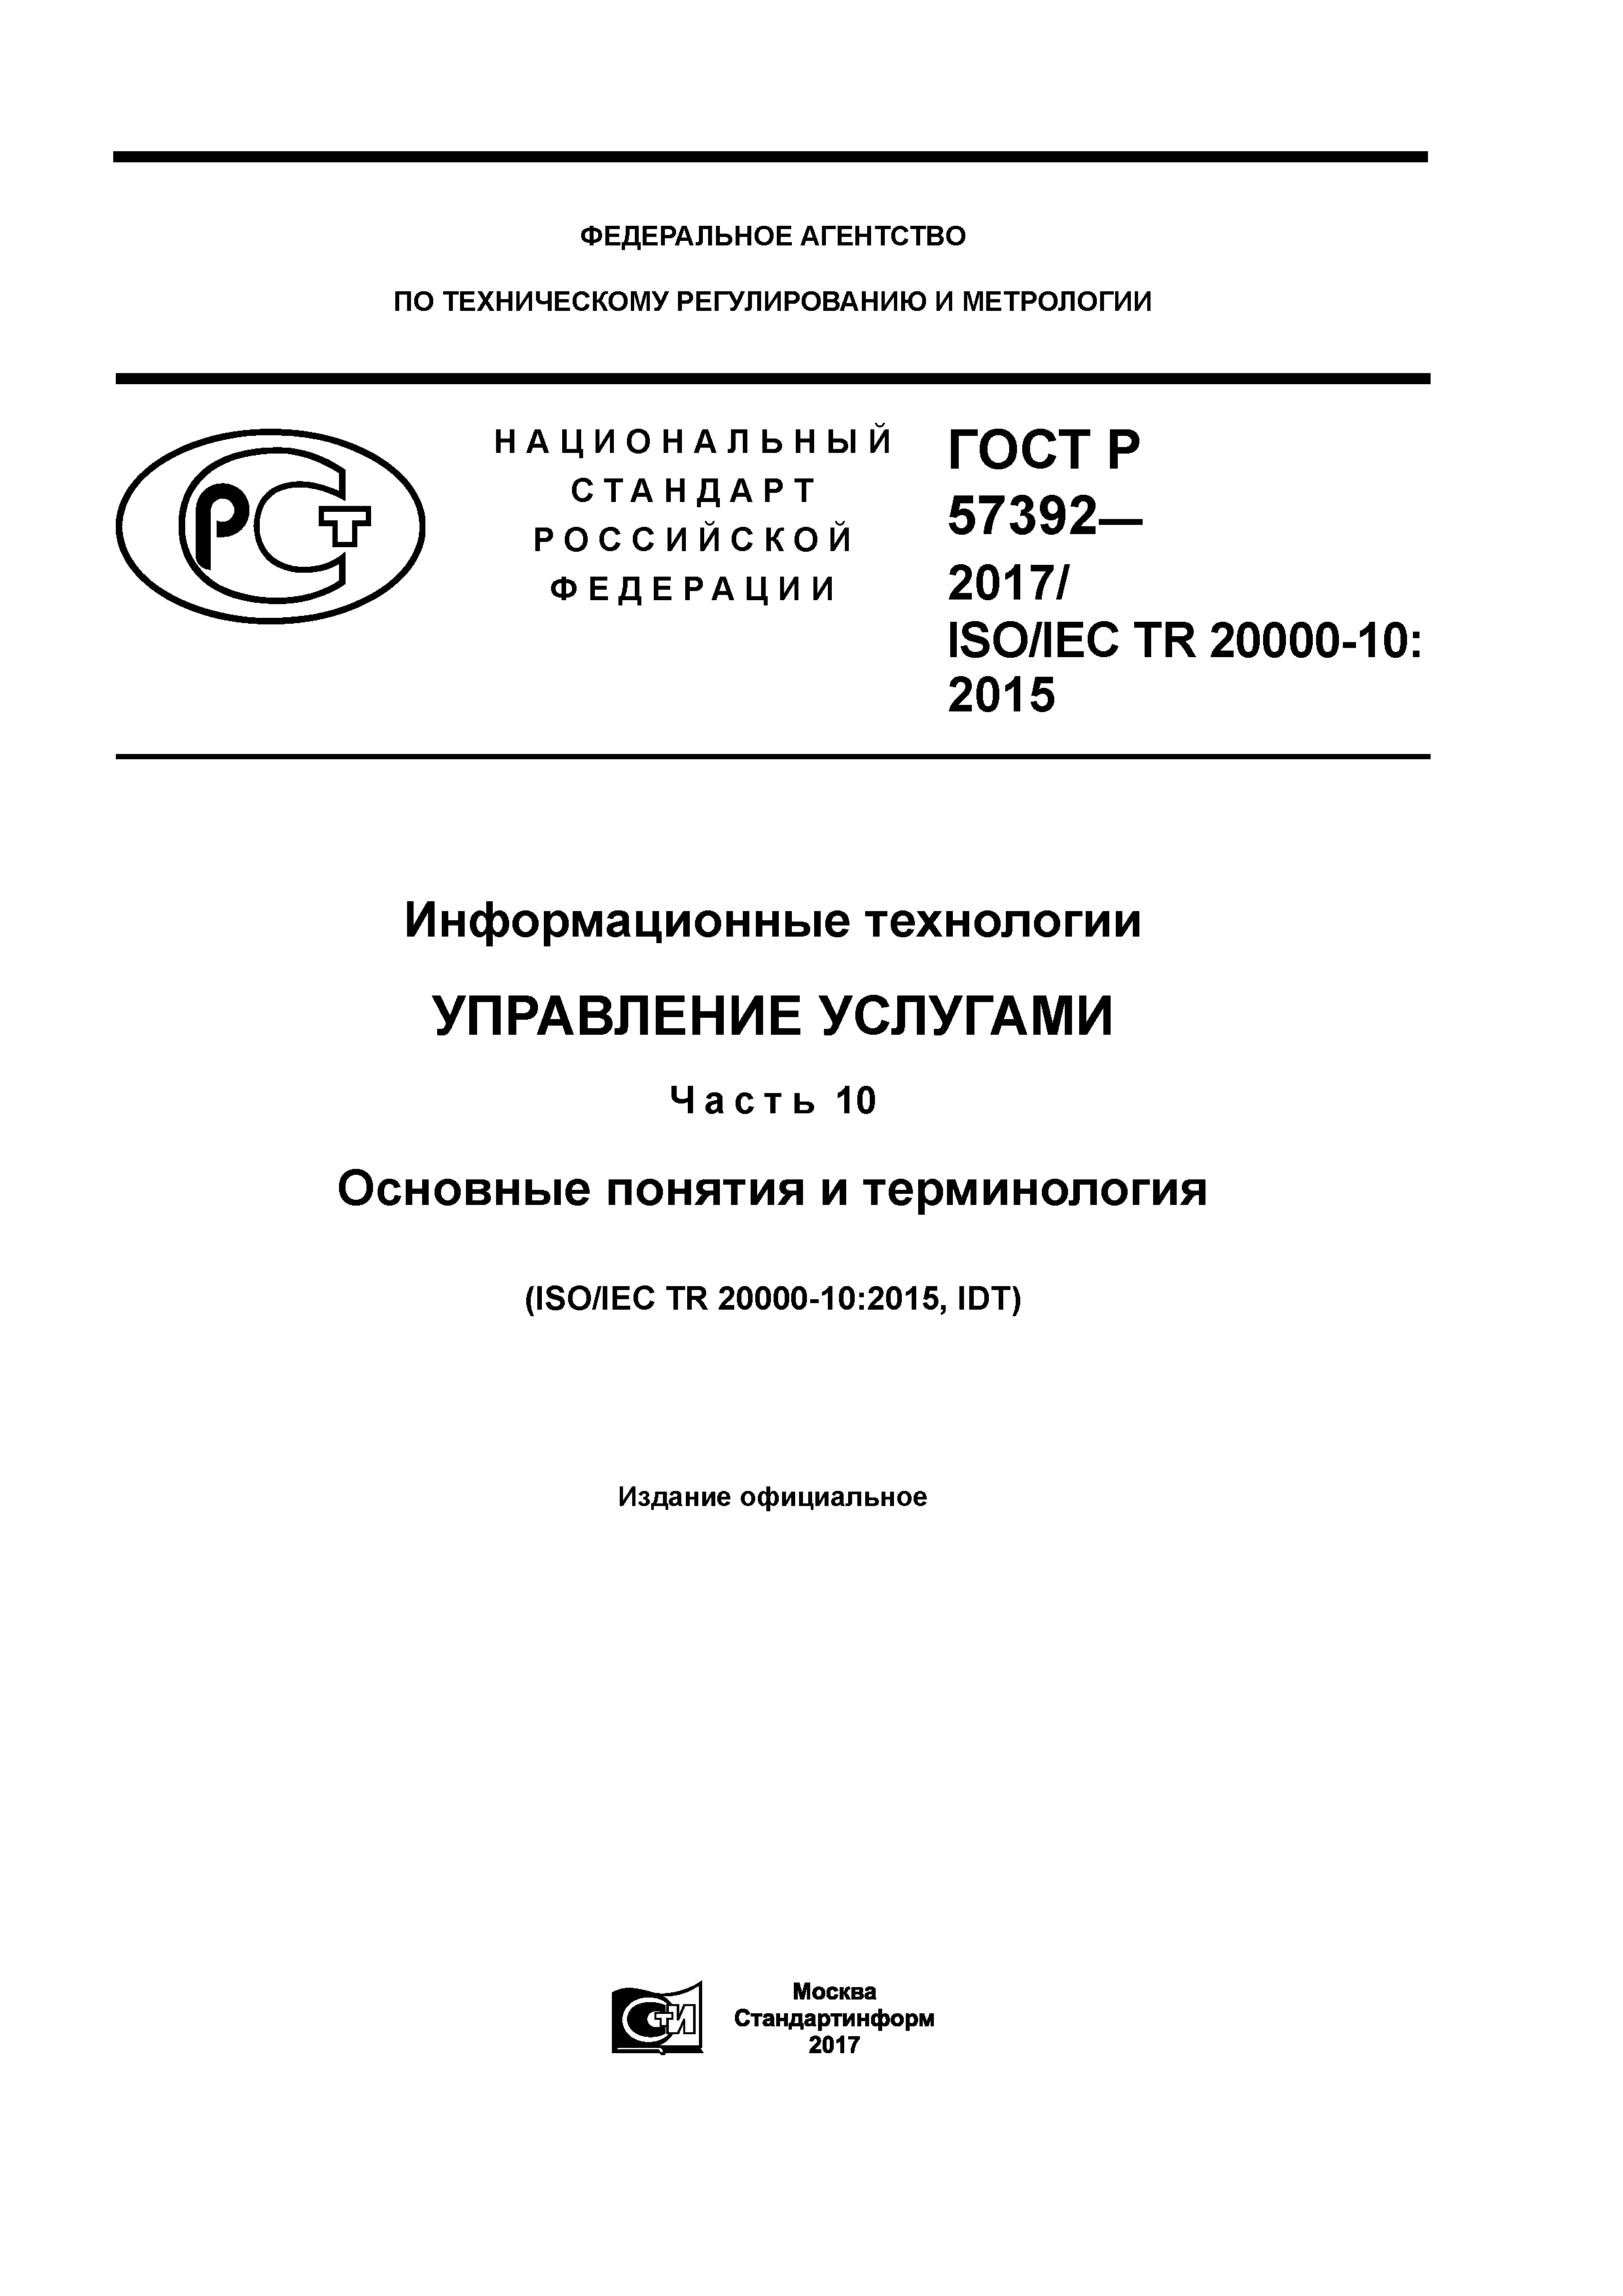 ГОСТ Р 57392-2017